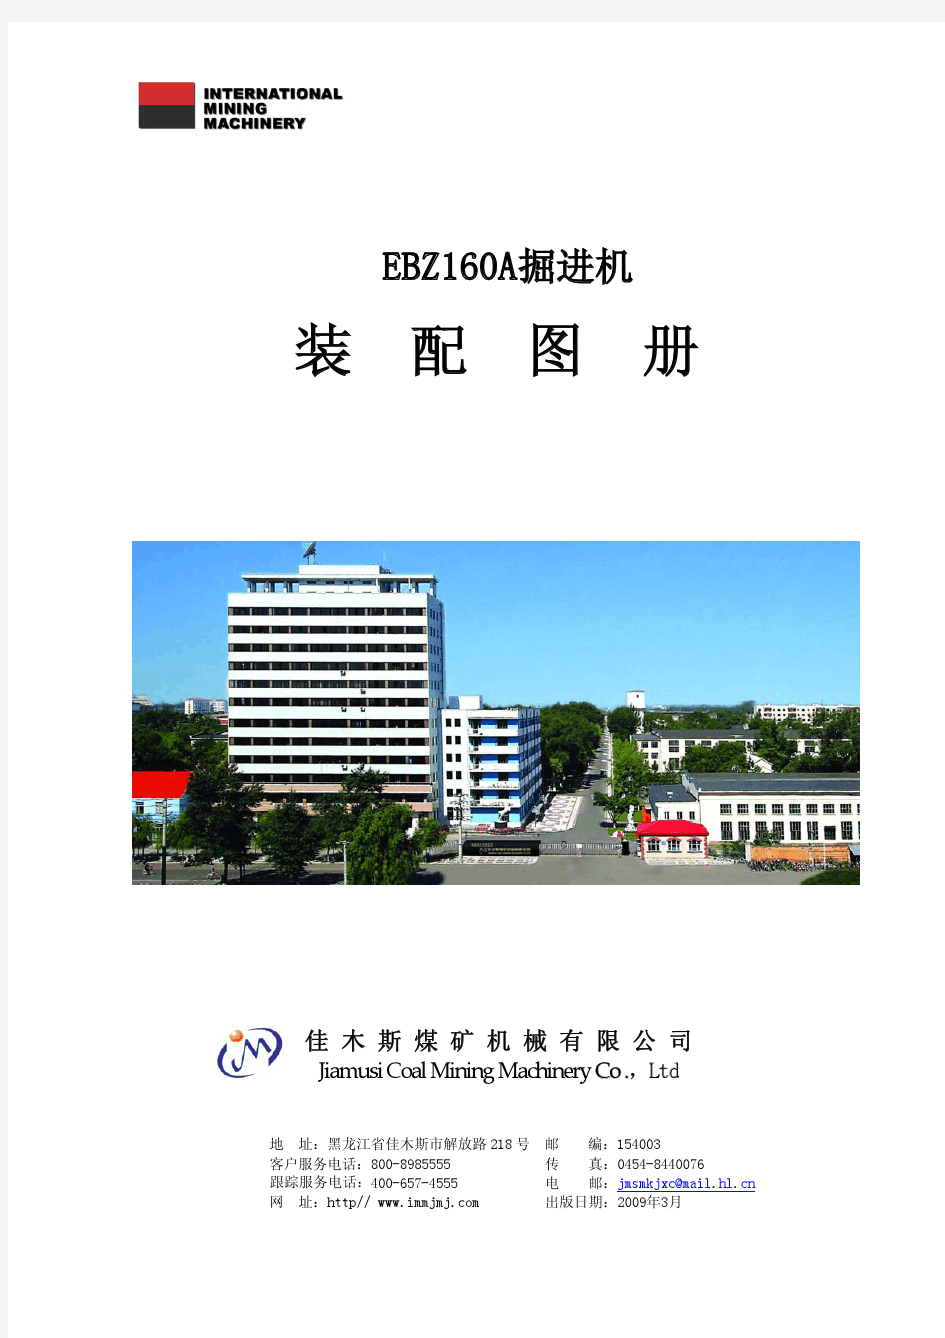 EBZ160A 掘进机图册(双密封)青岛天迅 2009.3.13